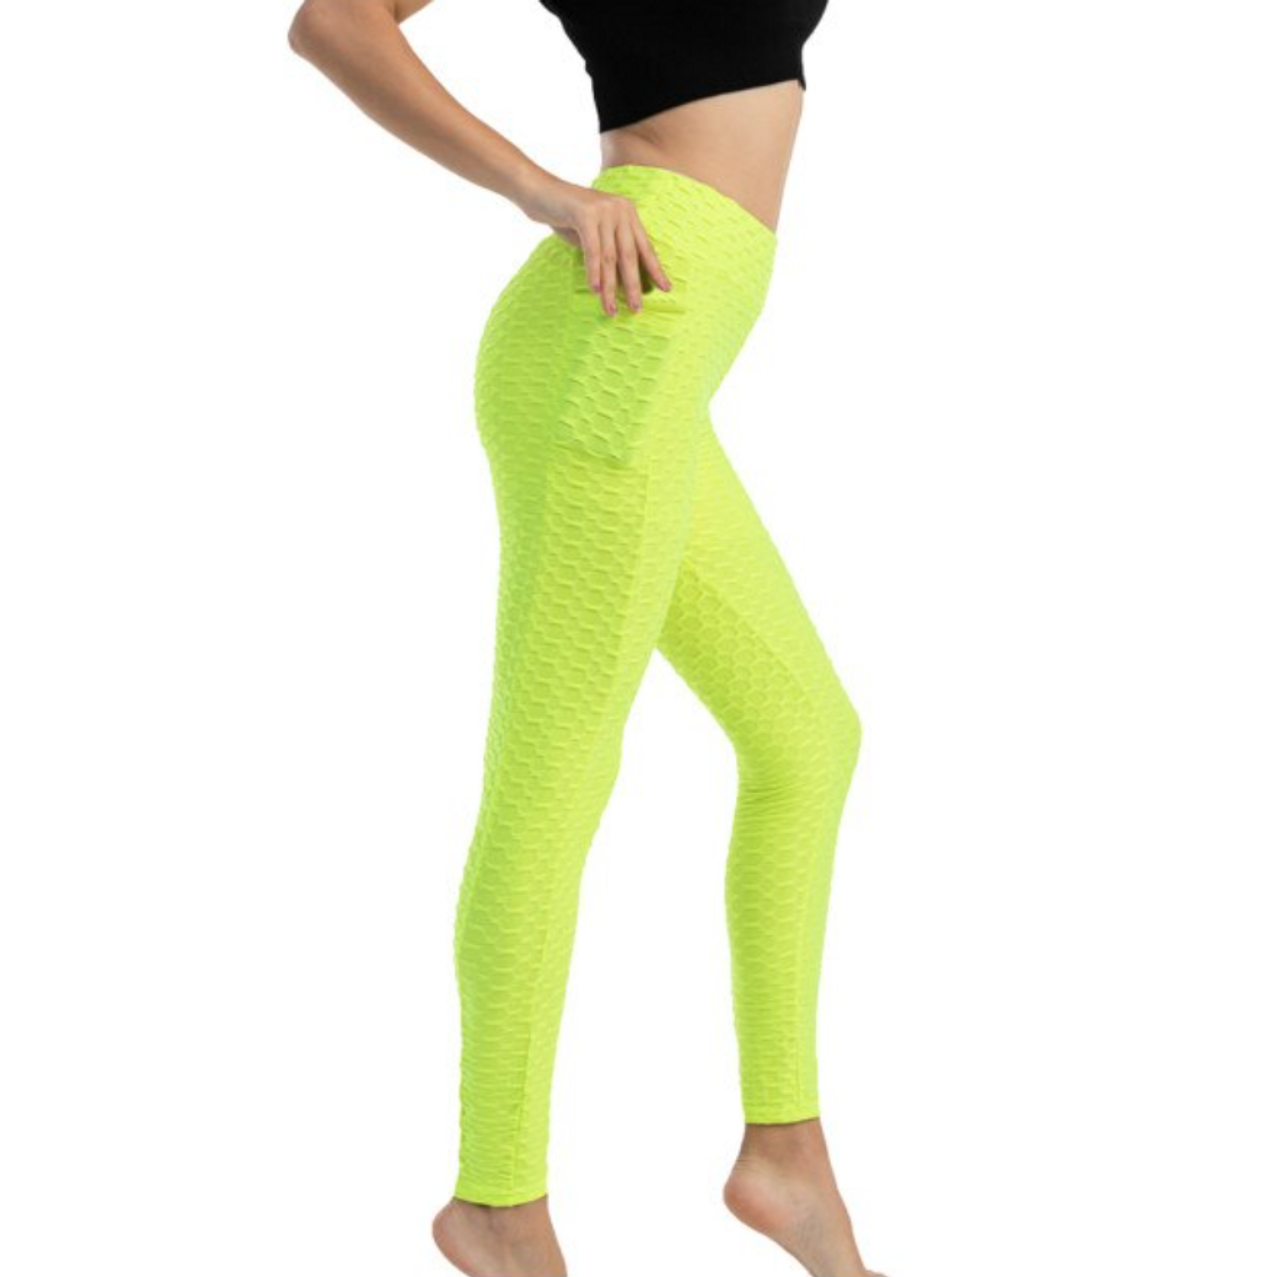 FRESNK High-Waisted Ultra Stretchy Leggings - Lime Green - Bargainshopuk